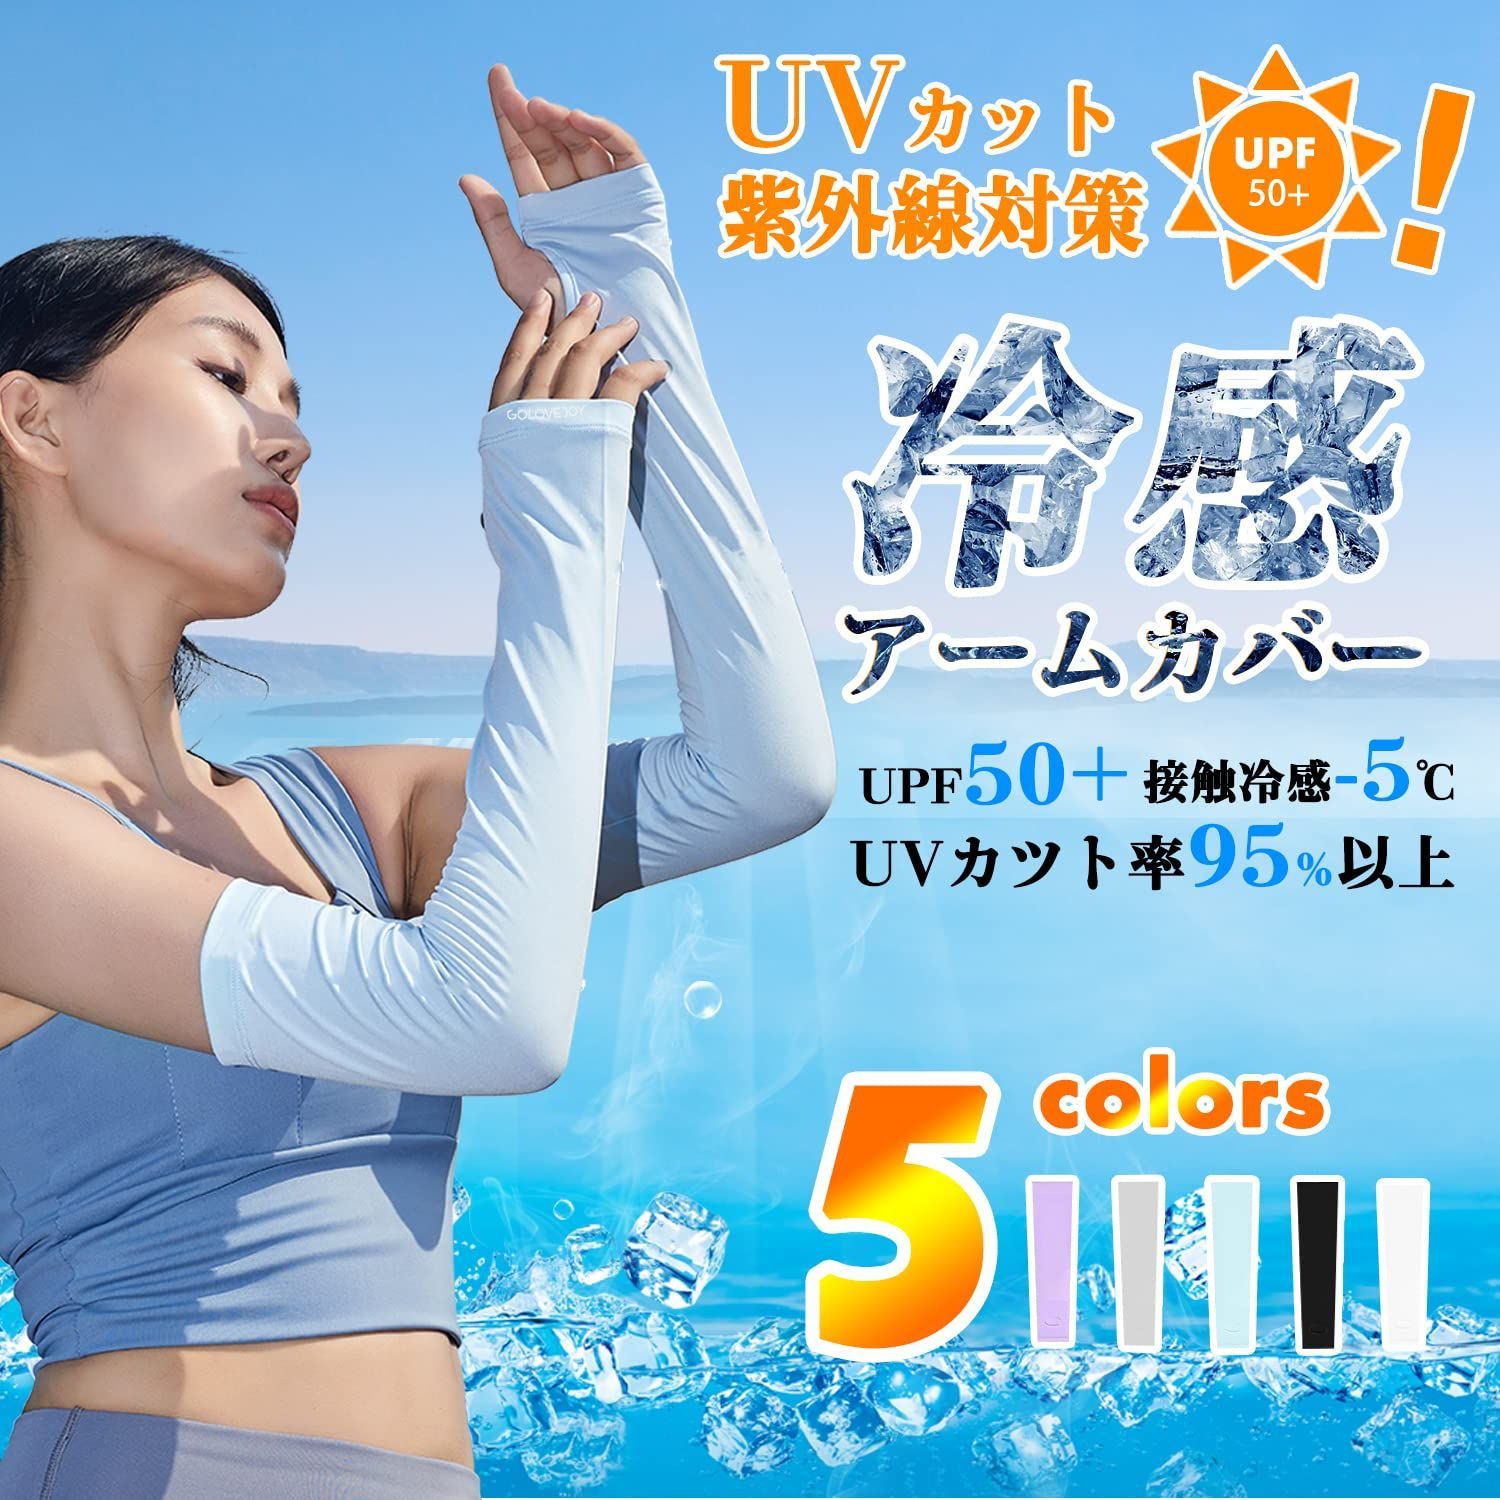 Hueapion アームカバー 冷感 夏 涼しい UV手袋 UVカット UPF50+ 吸汗速